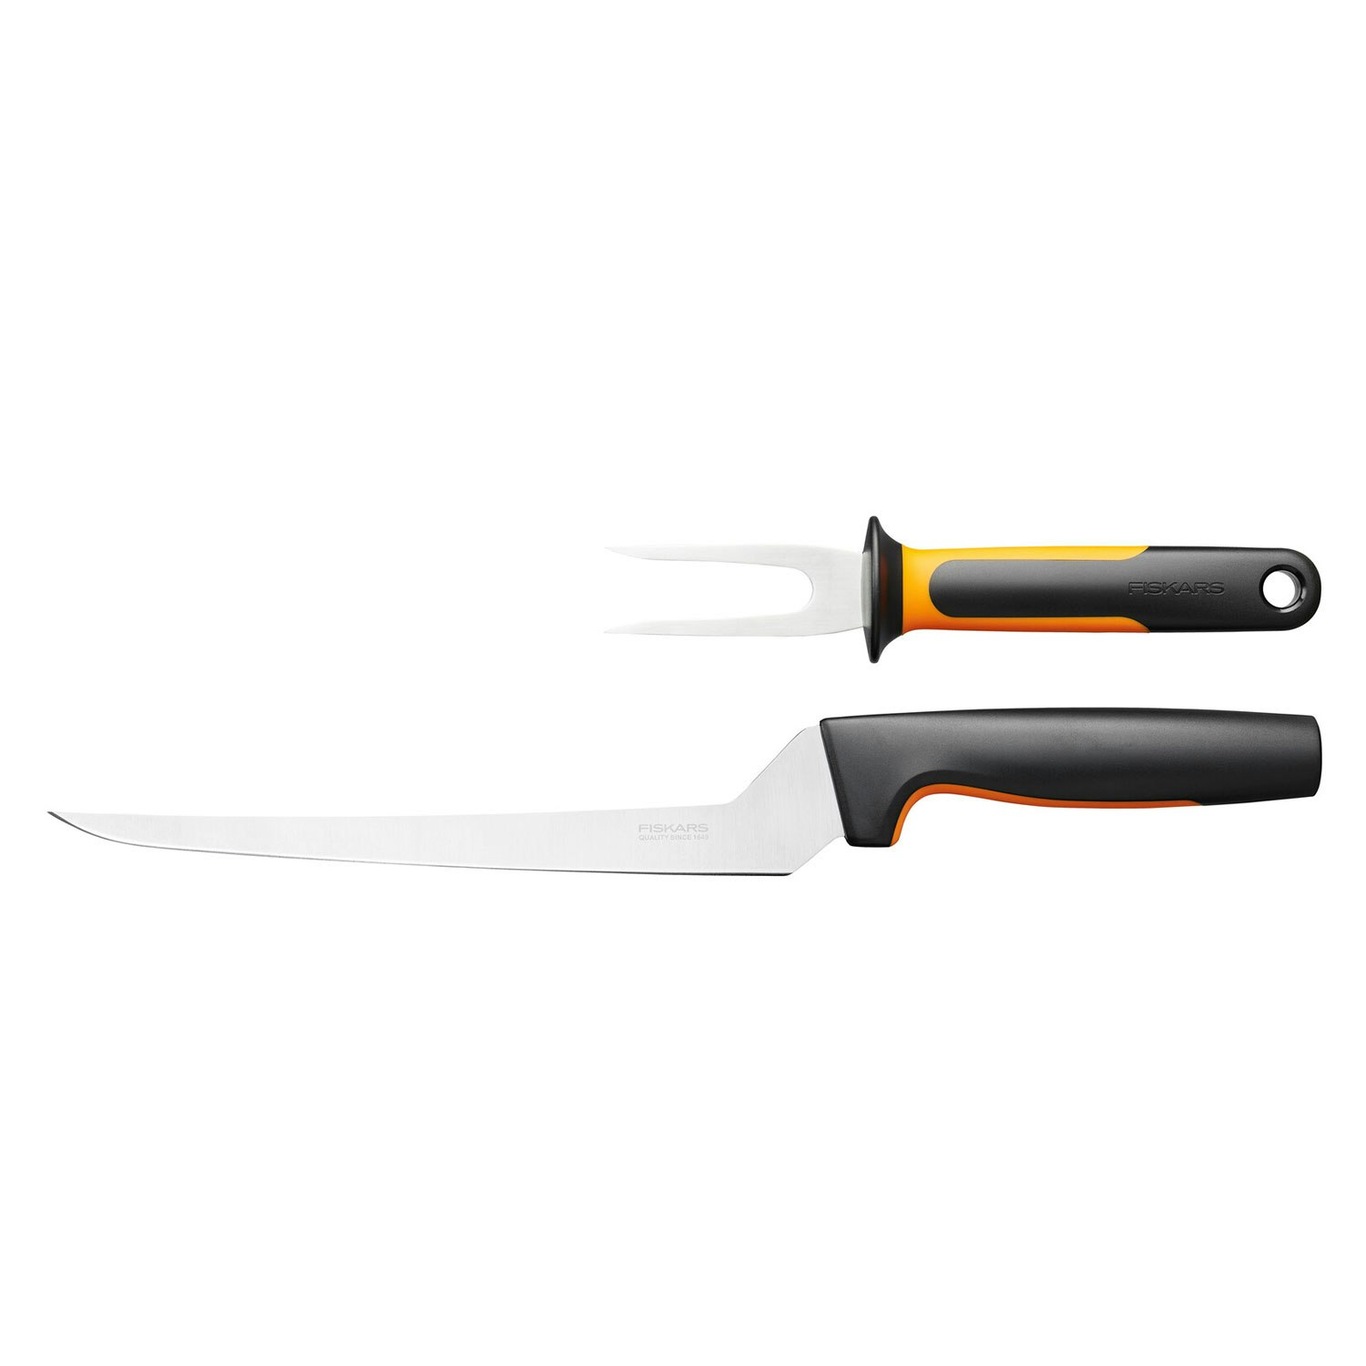 https://royaldesign.com/image/2/fiskars-functional-form-fish-knives-set-2-pack-0?w=800&quality=80